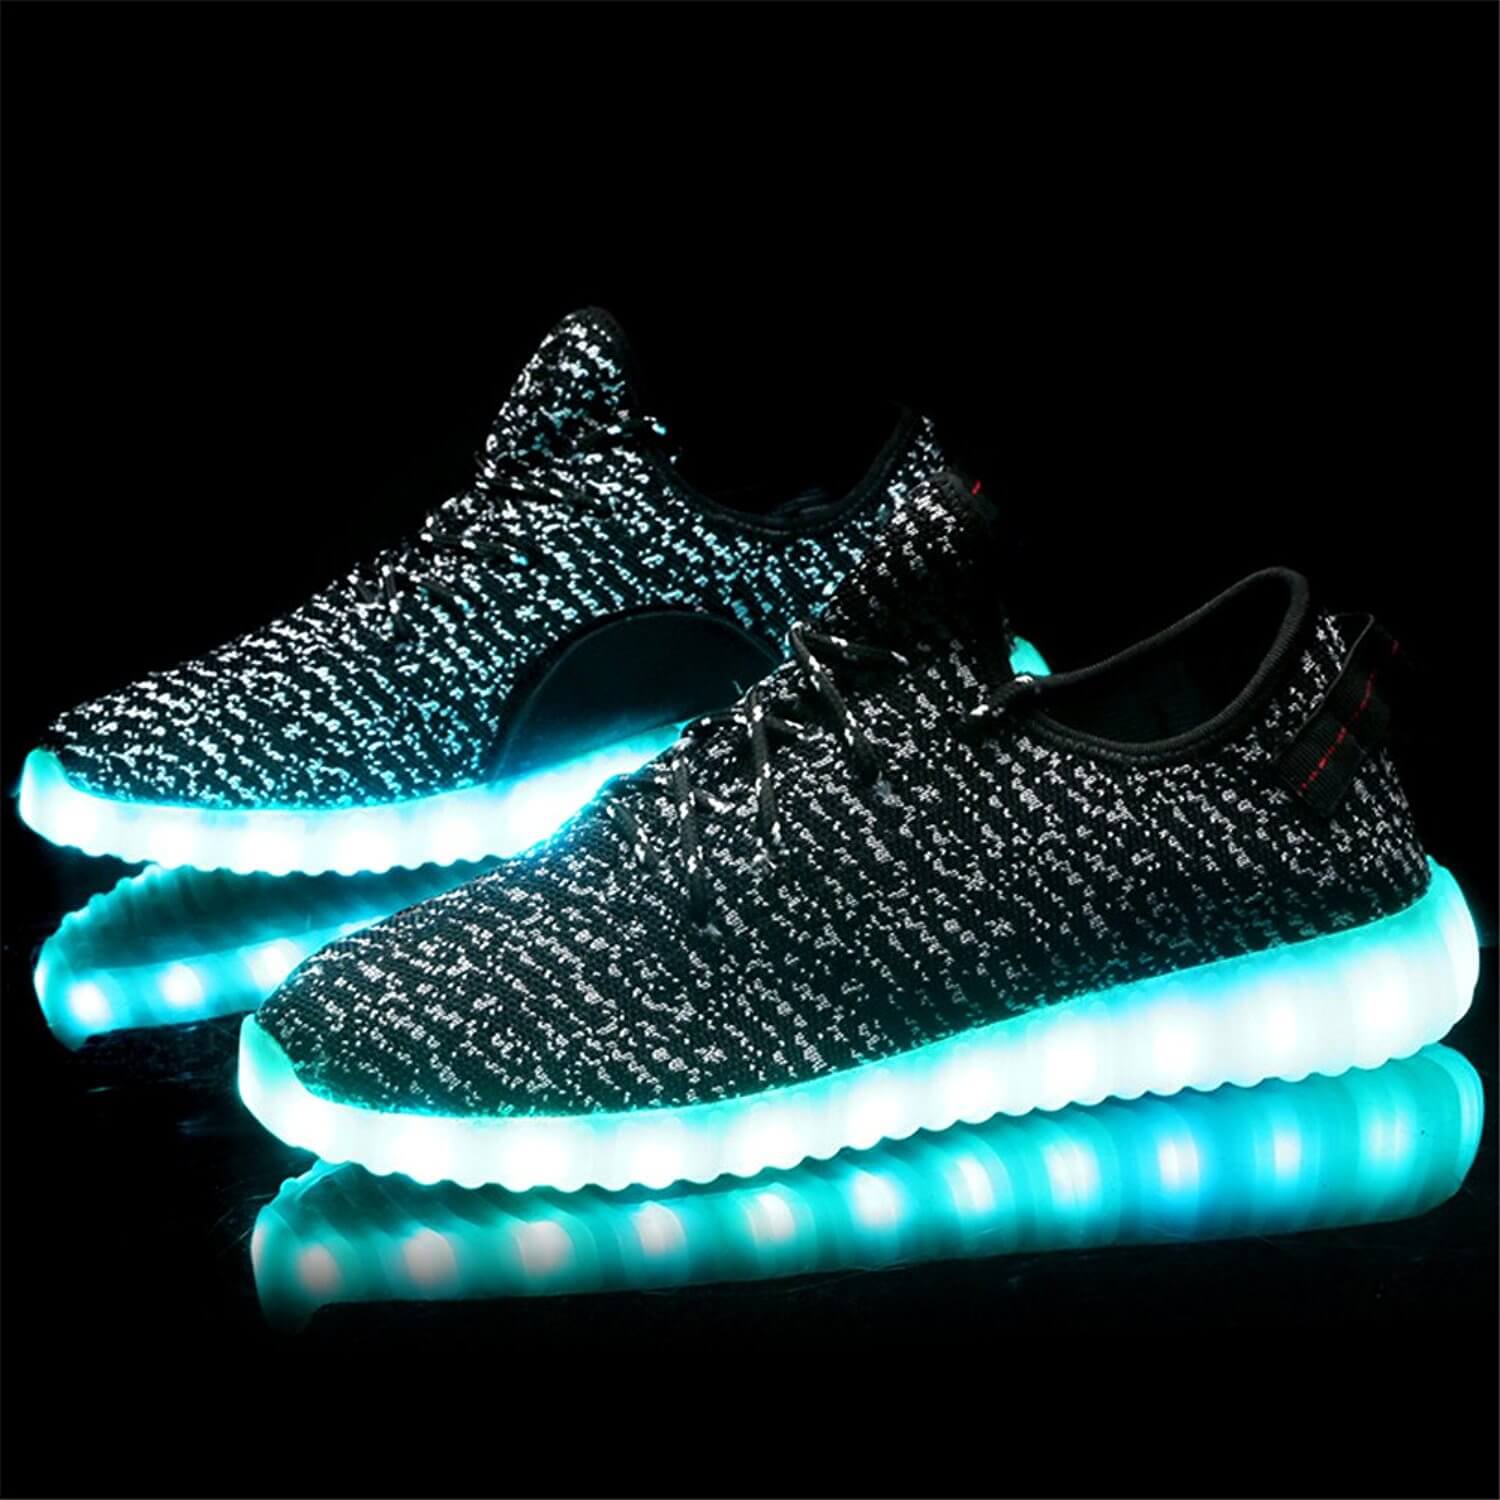 light-up-shoes-black-yeezy.jpg